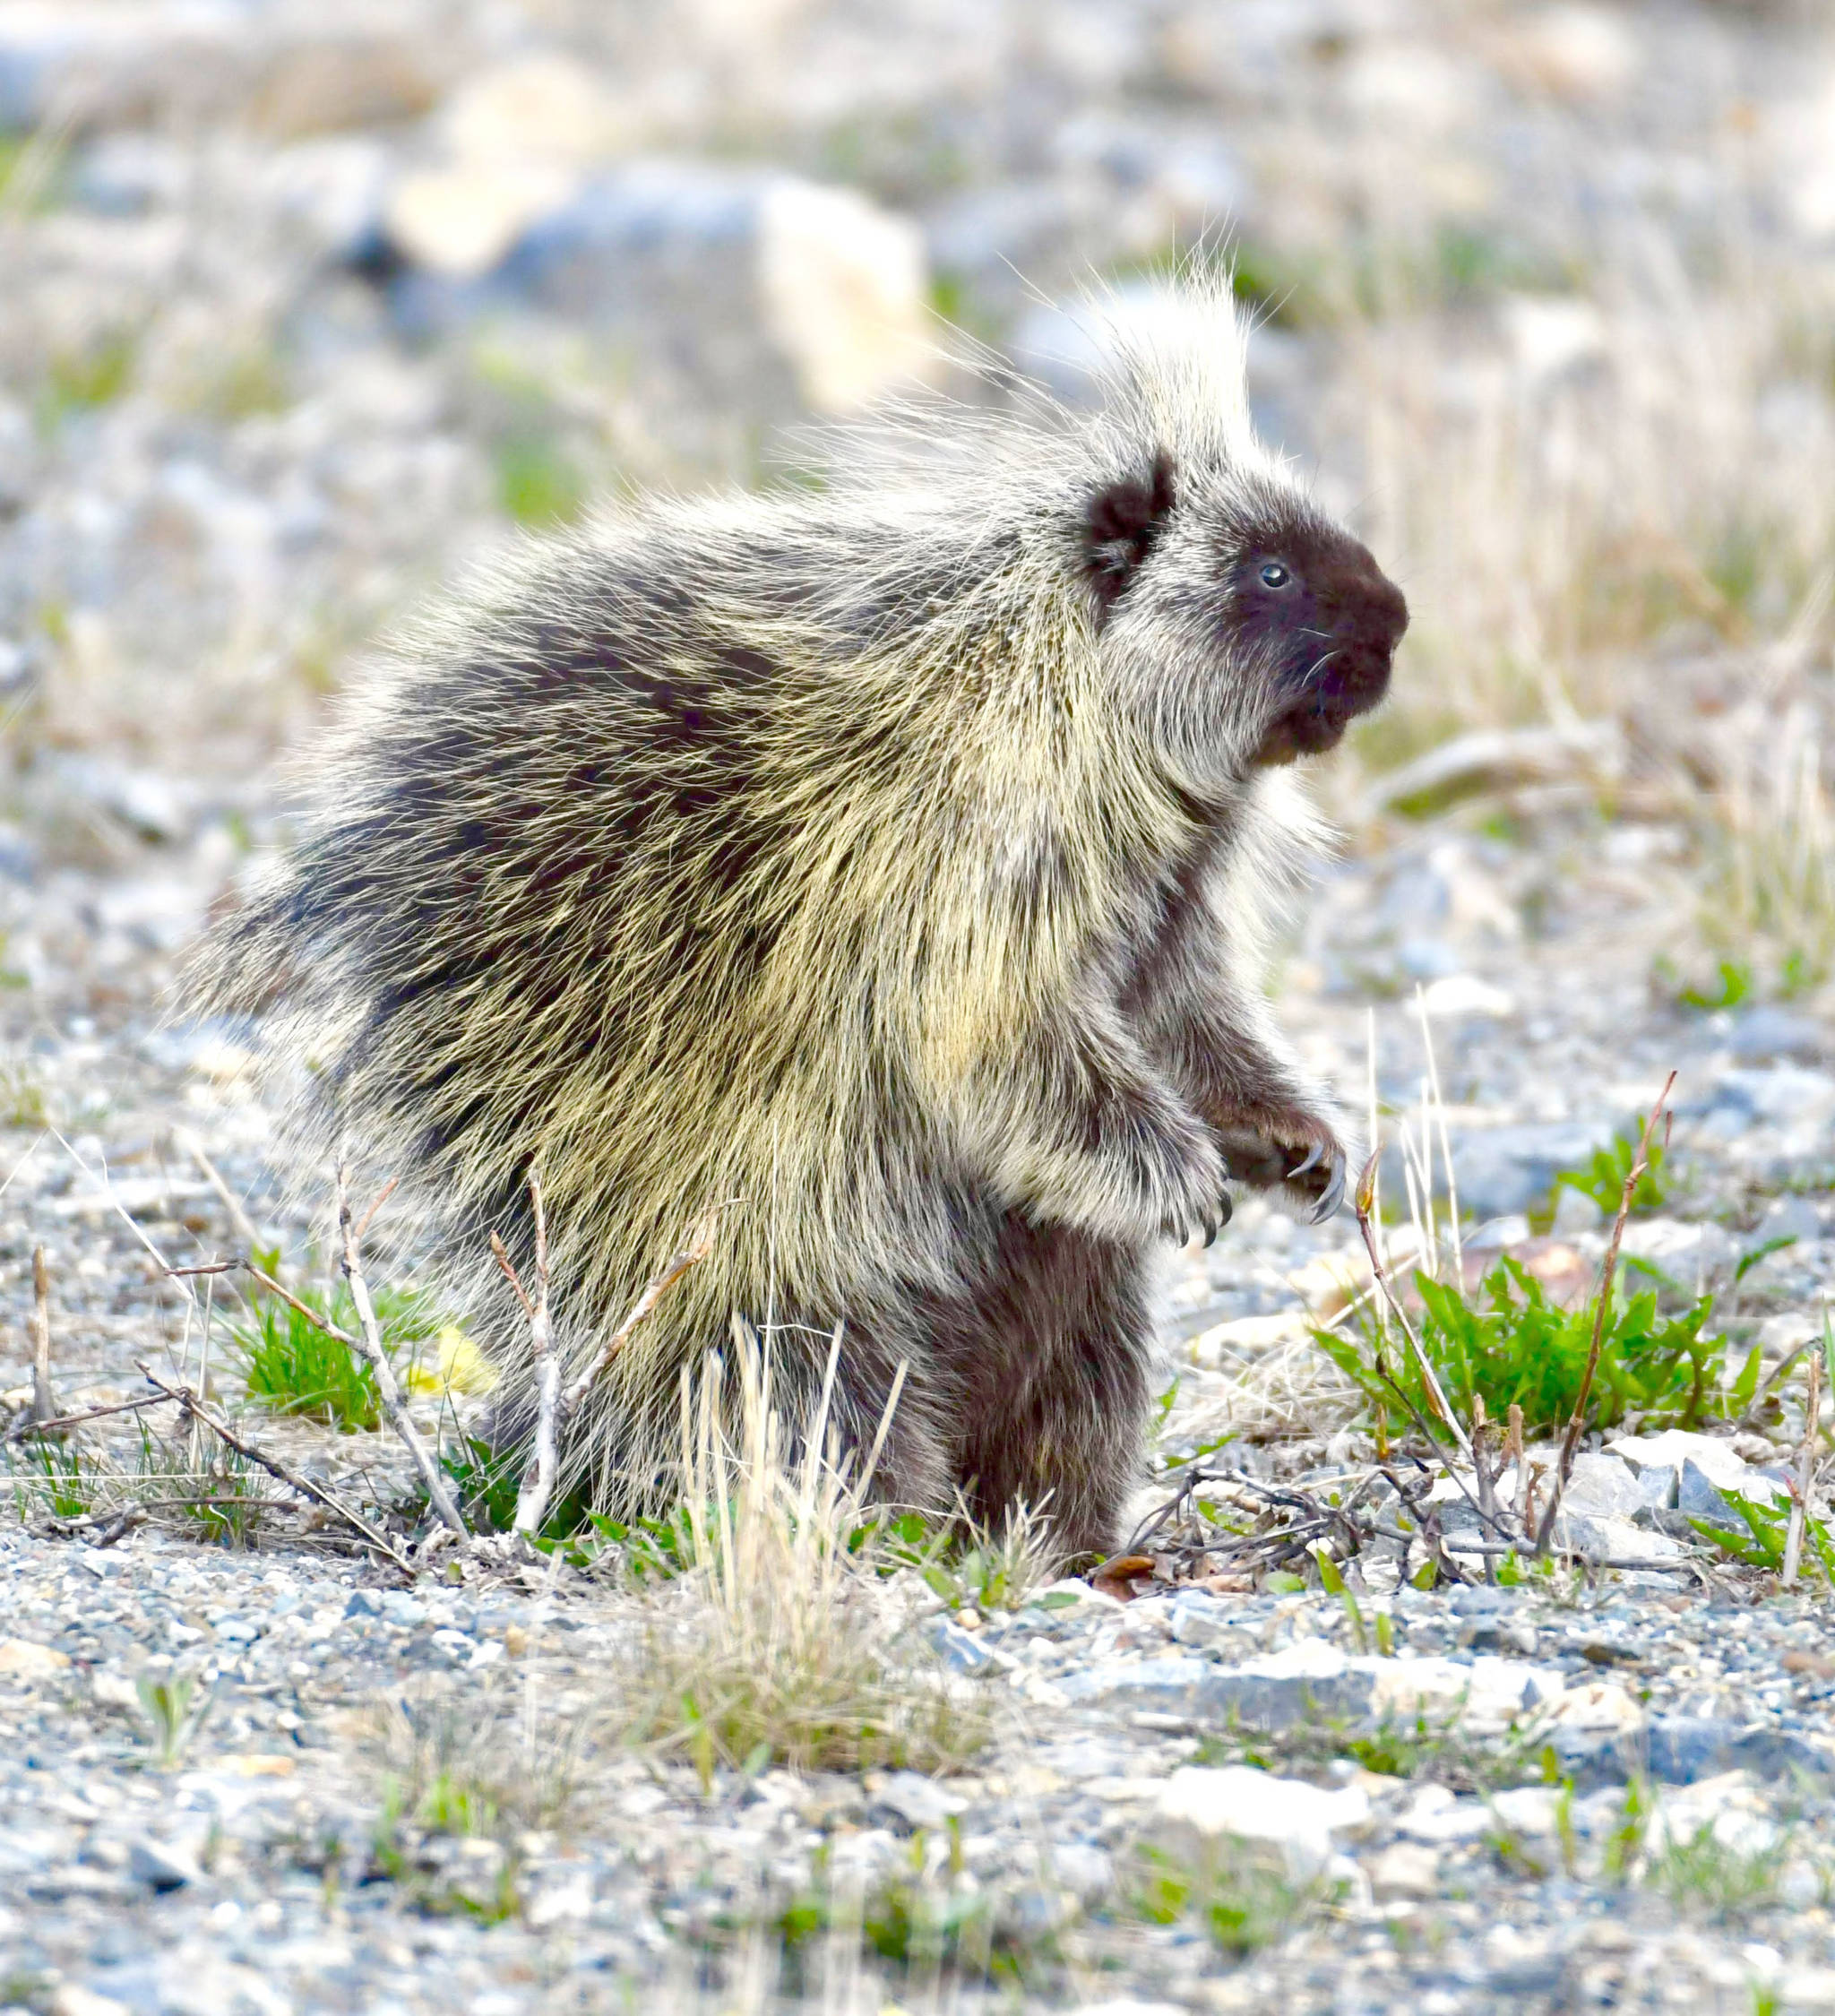 Refuge notebook: The porcupine — an underappreciated creature